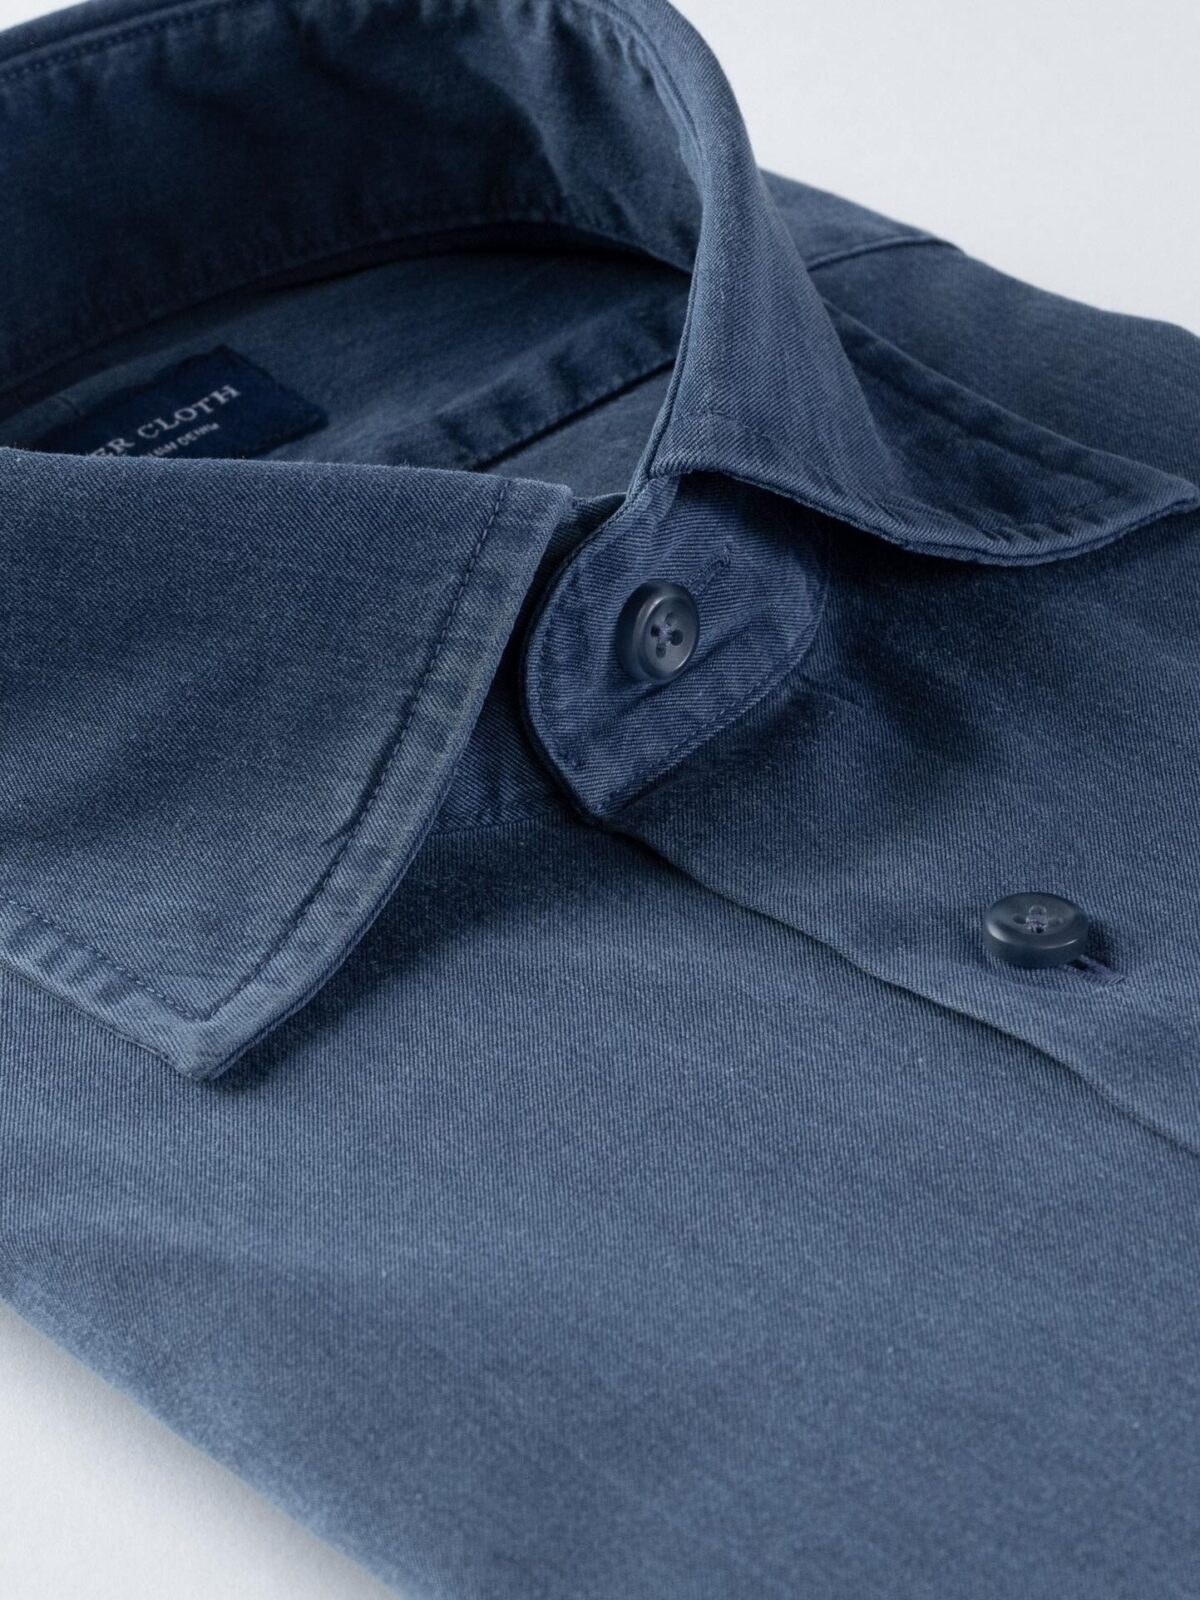 Albiate Washed Dark Slate Blue Denim Shirt by Proper Cloth